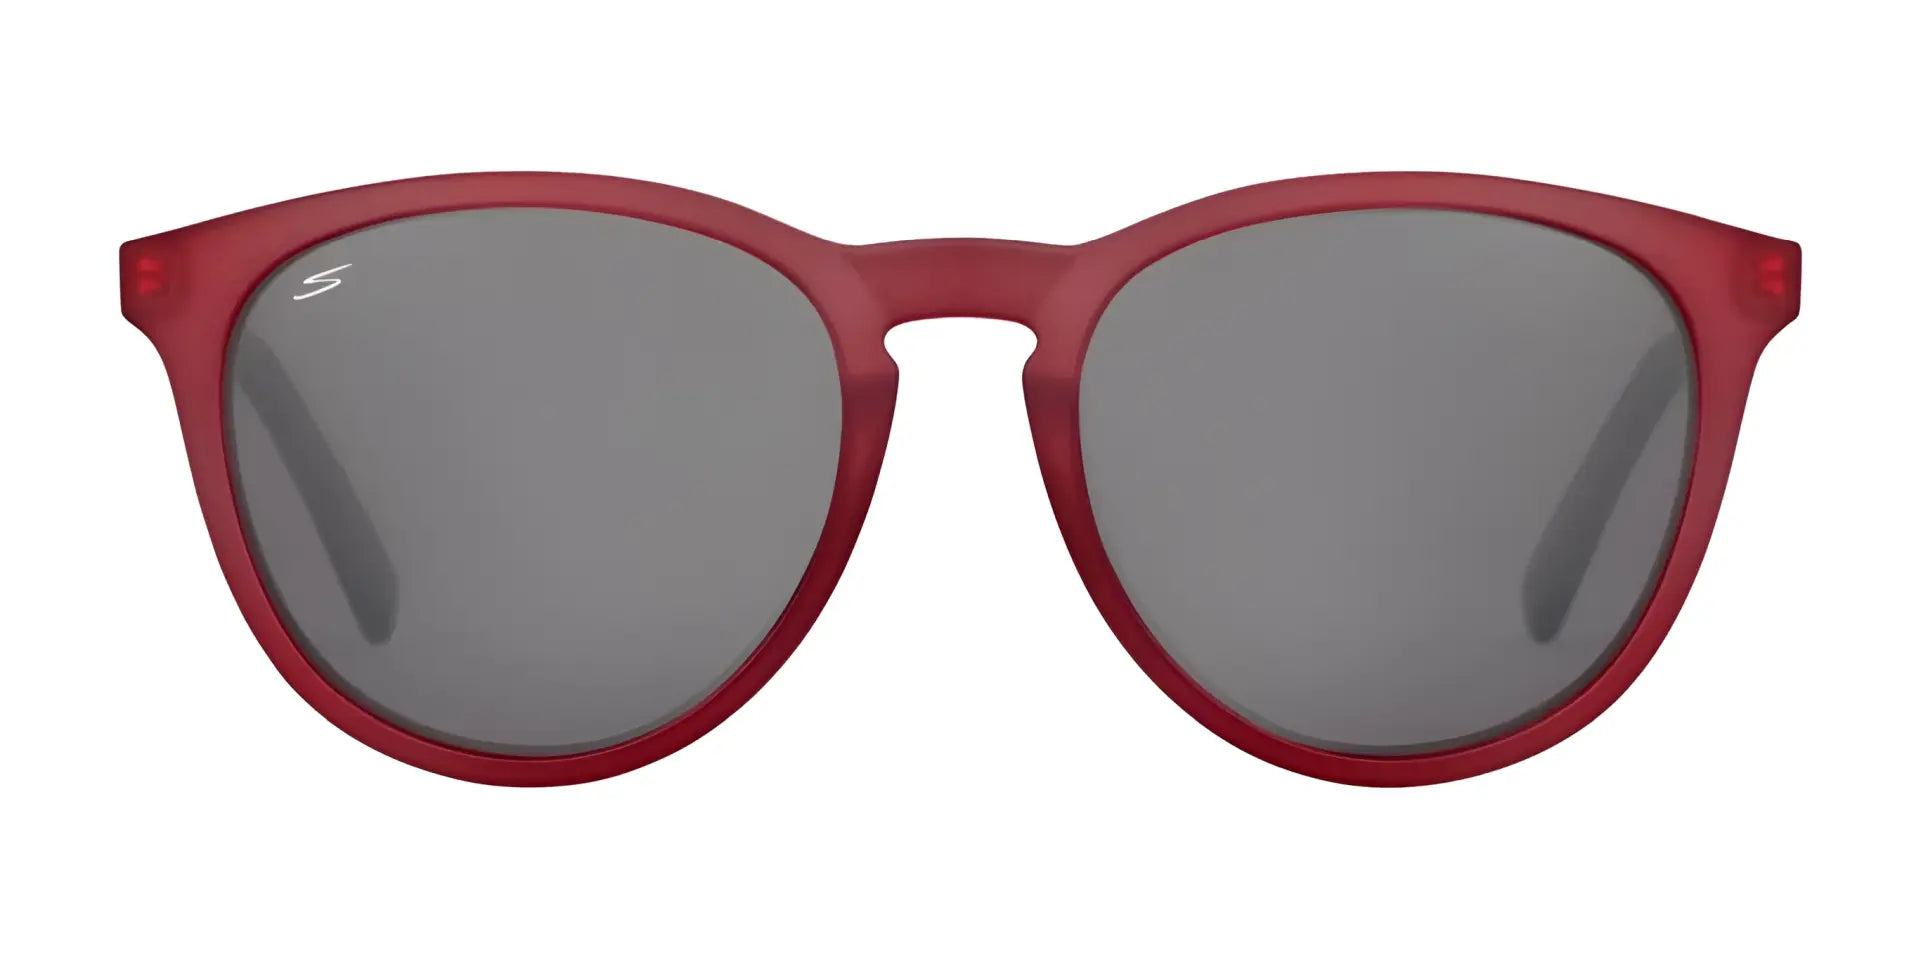 Serengeti BRAWLEY Sunglasses Matte Crystal Pink / Saturn Polarized Smoke Cat 2 to 3 B6